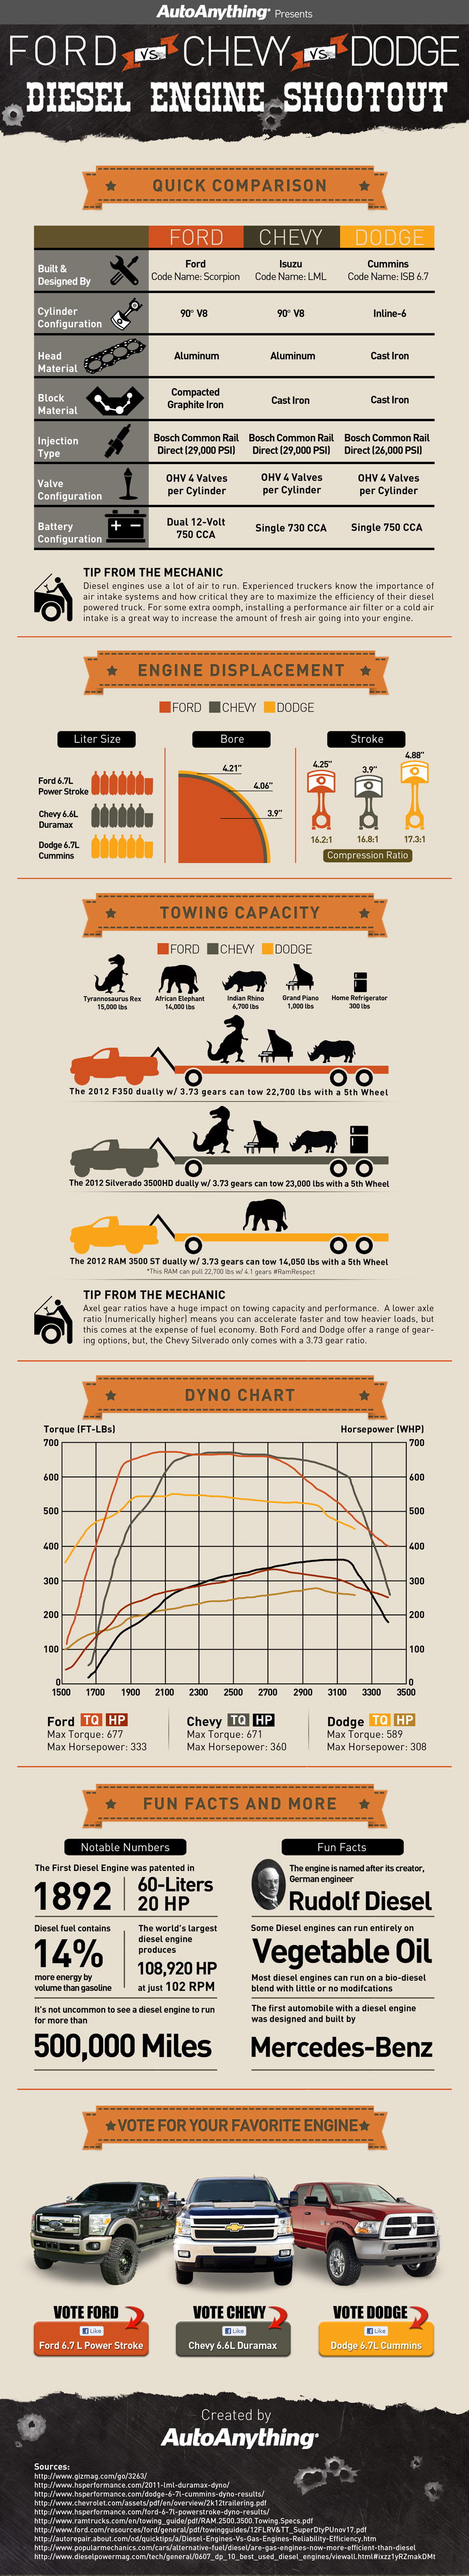 Diesel Engine Shootout: Ford vs Chevy vs Dodge